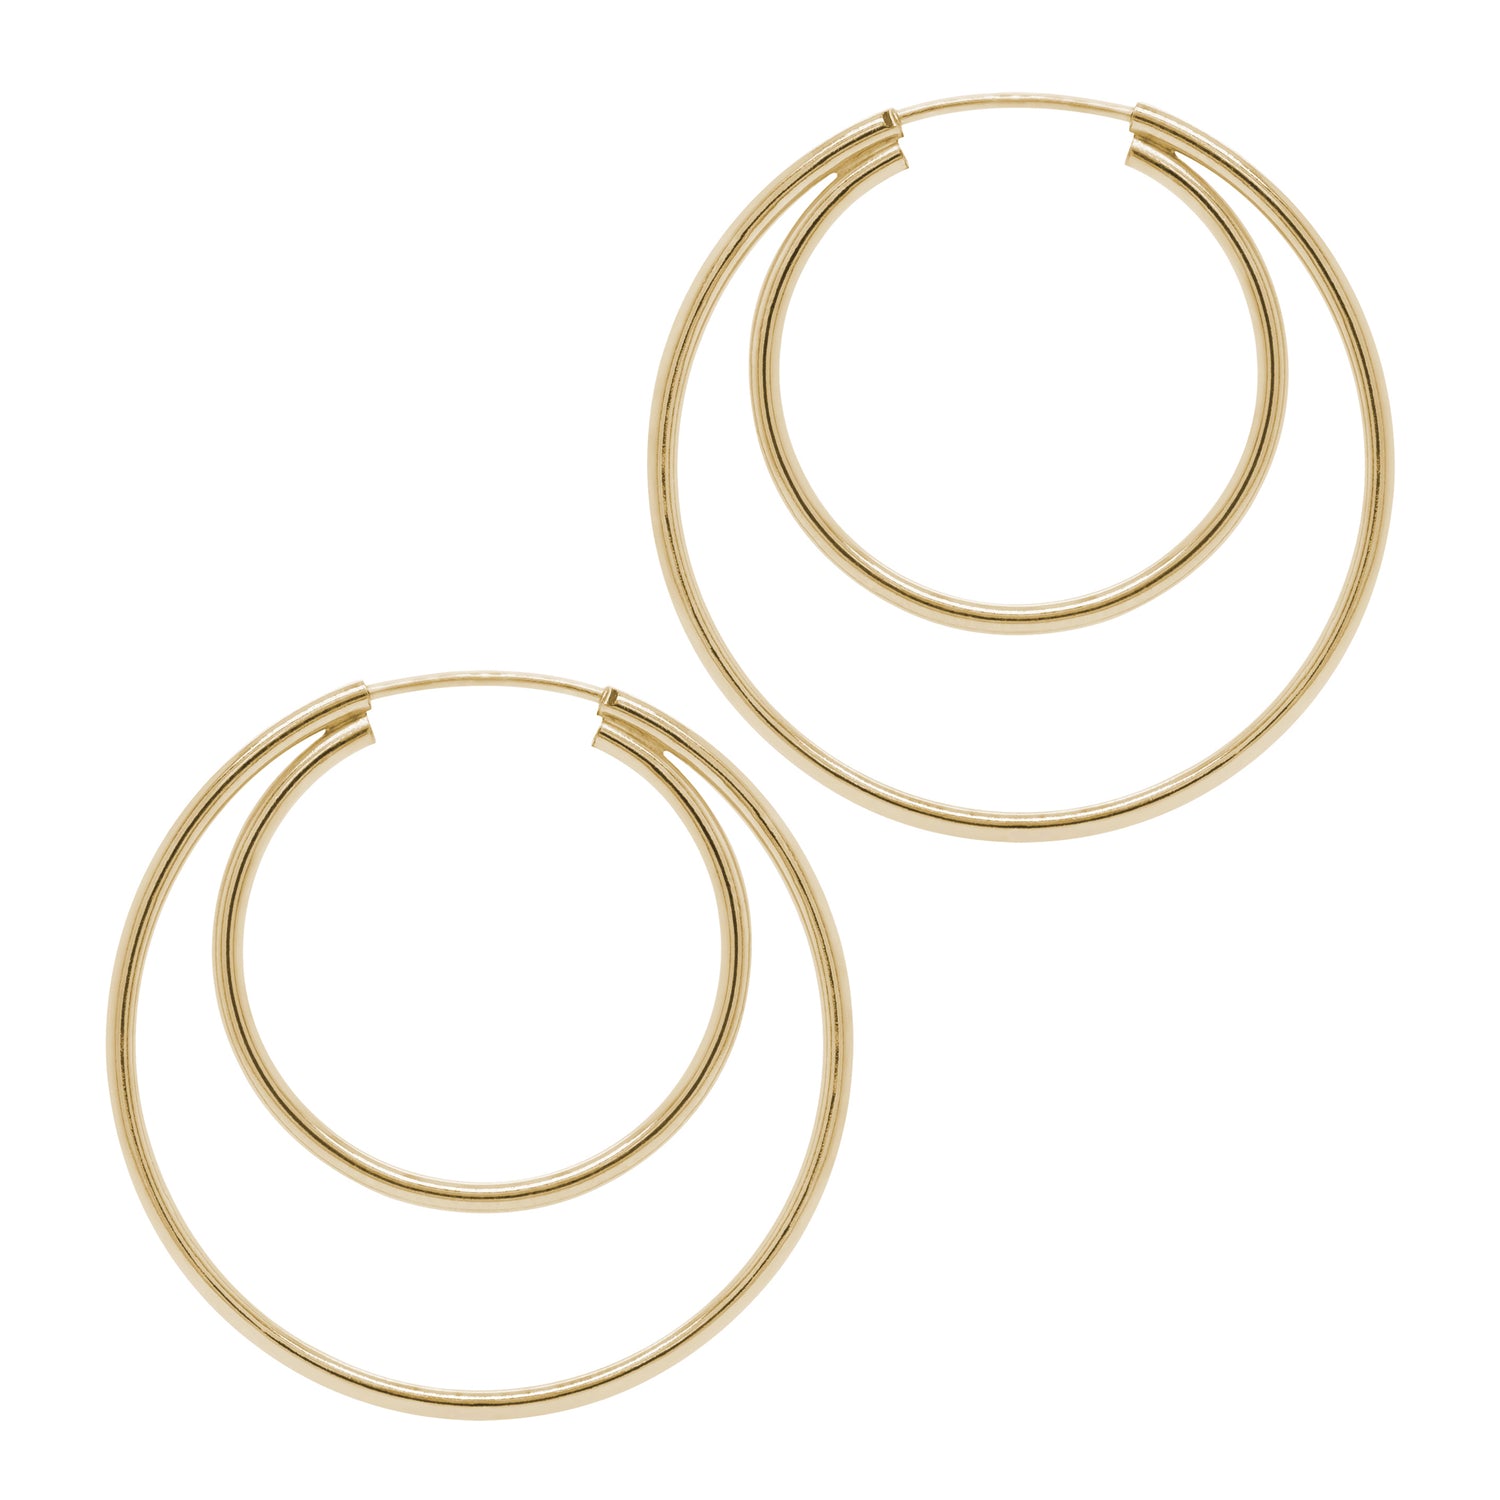 J&CO Jewellery Small Endless Hoop Earrings Gold